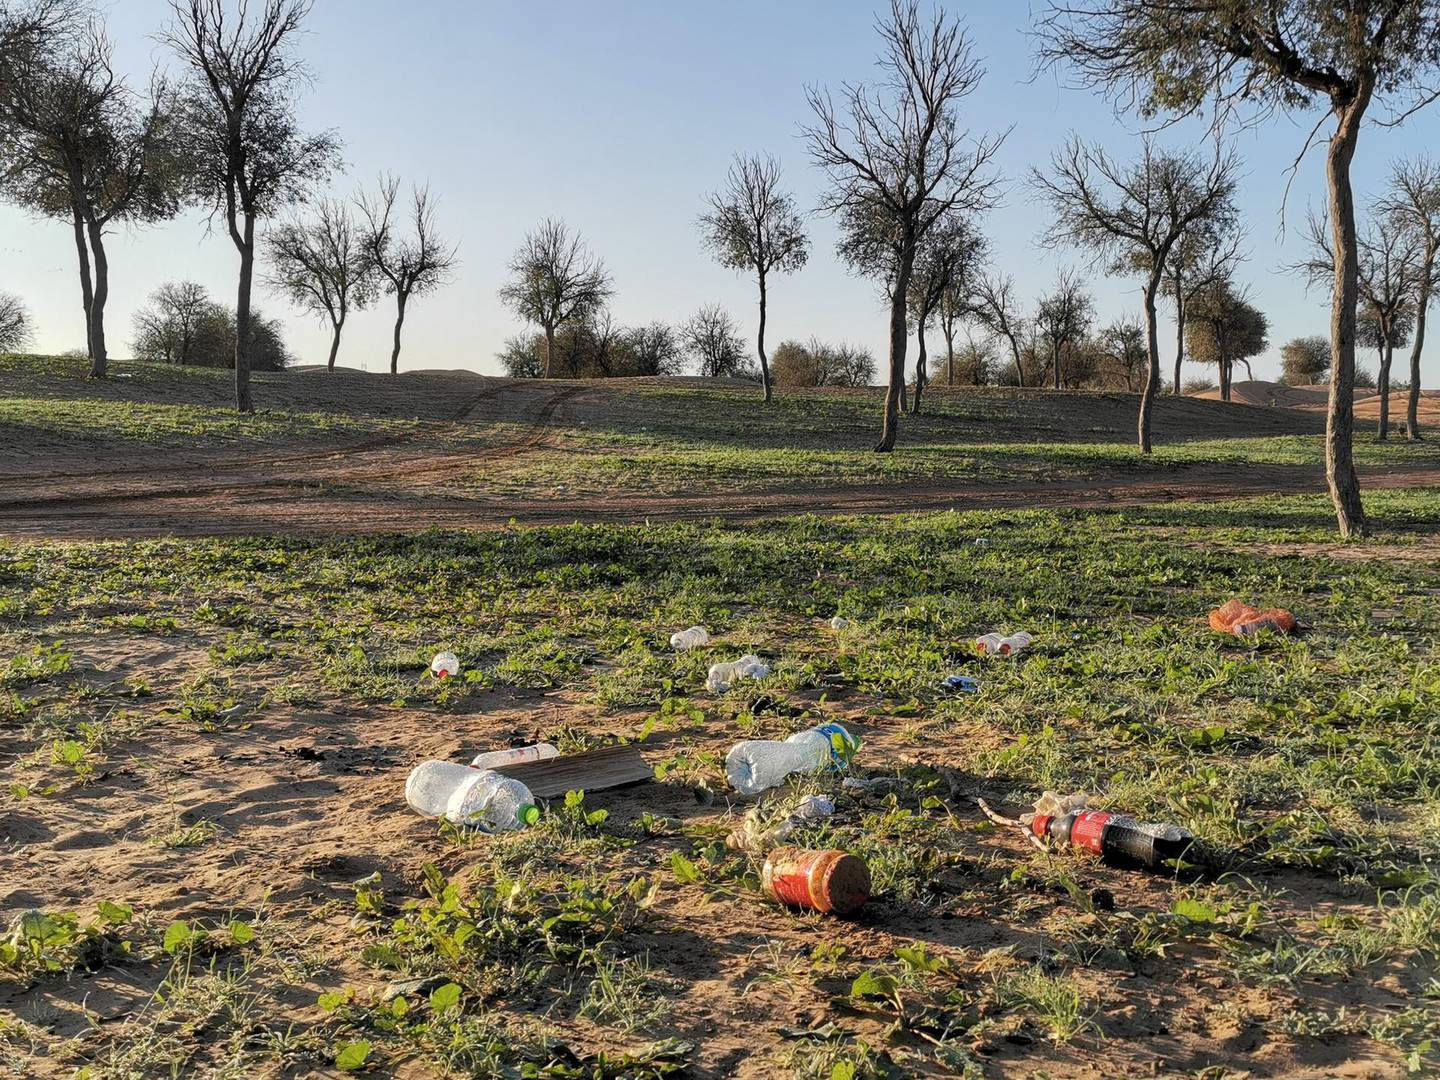 Plastic bottles left behind by campers in Al Mazraa area of Ras Al Khaimah. Courtesy Falah Mroish